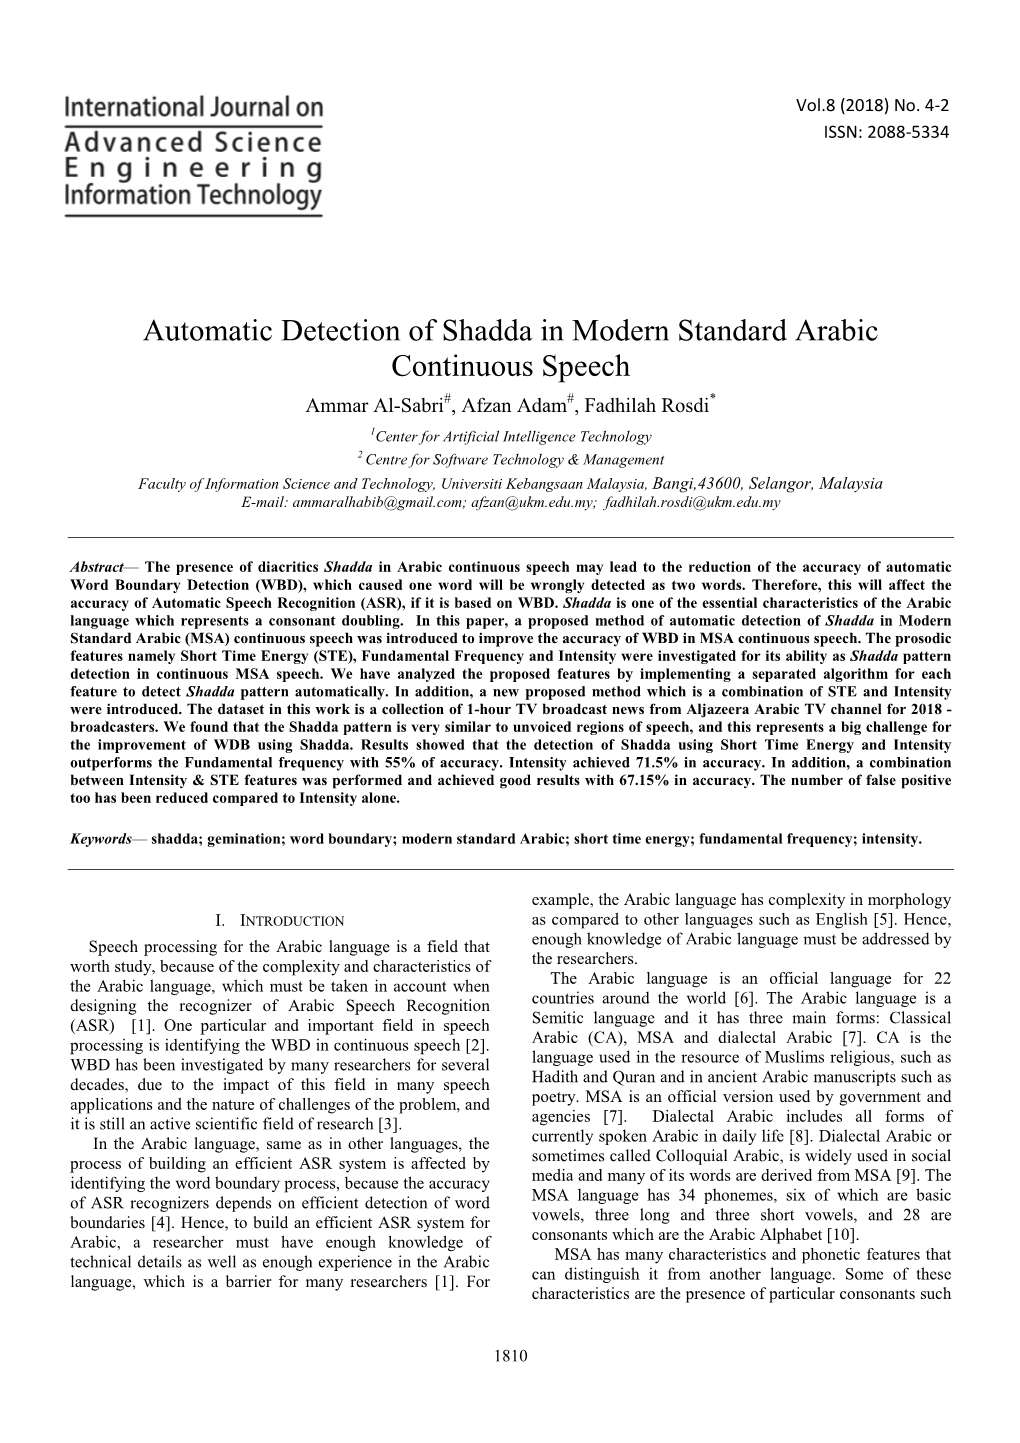 Automatic Detection of Shadda in Modern Standard Arabic